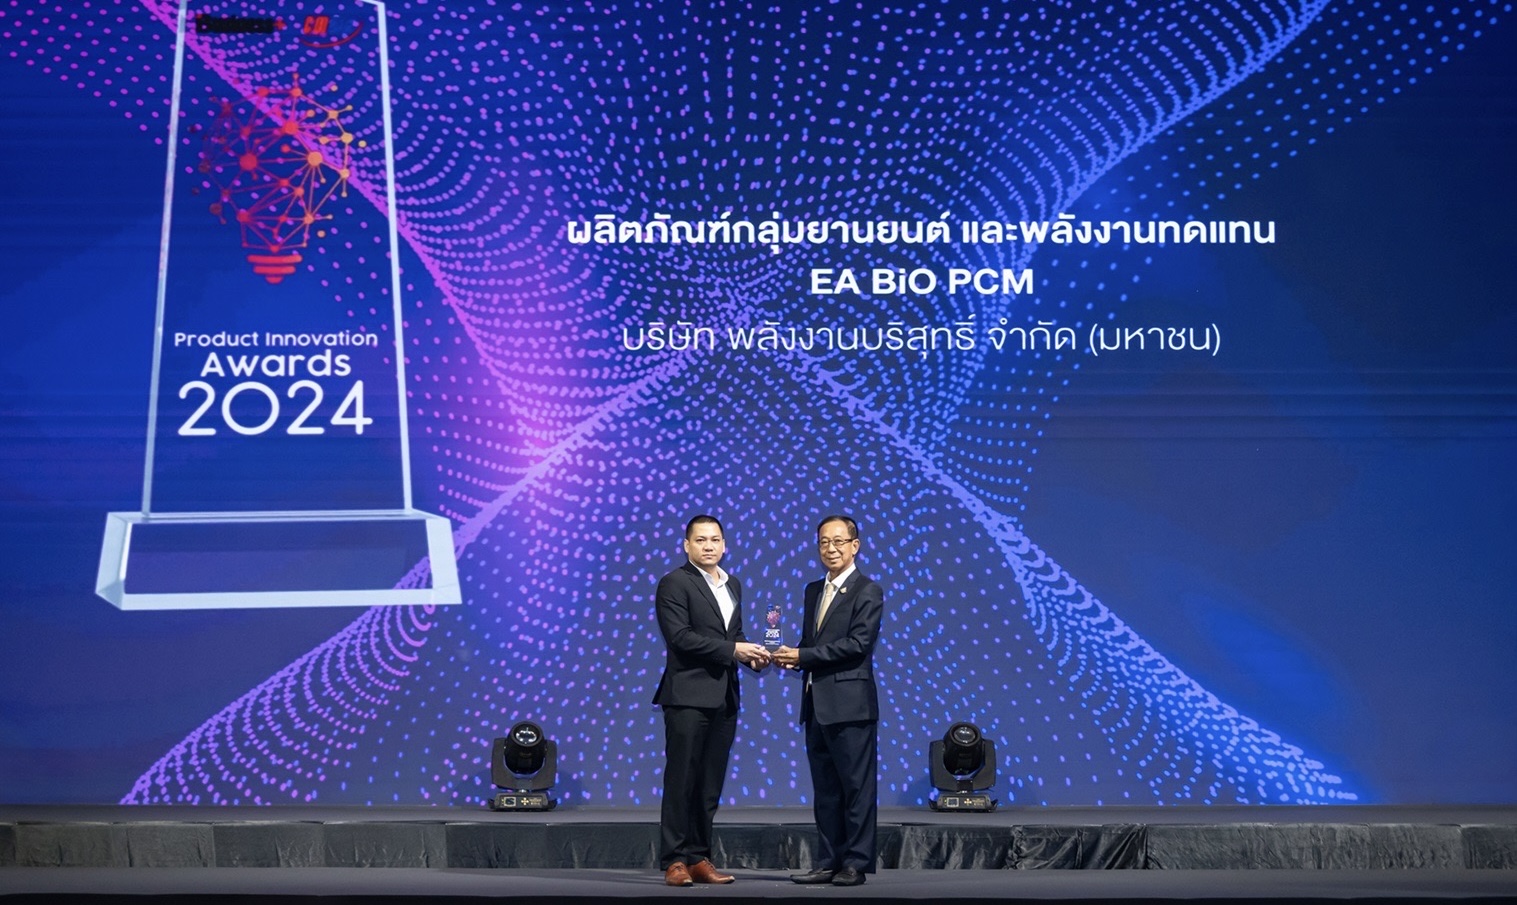 EBI บริษัทในกลุ่มพลังงานบริสุทธิ์ สร้างผลงาน ‘Bio PCM’ คว้ารางวัลนวัตกรรมแห่งปี 2024